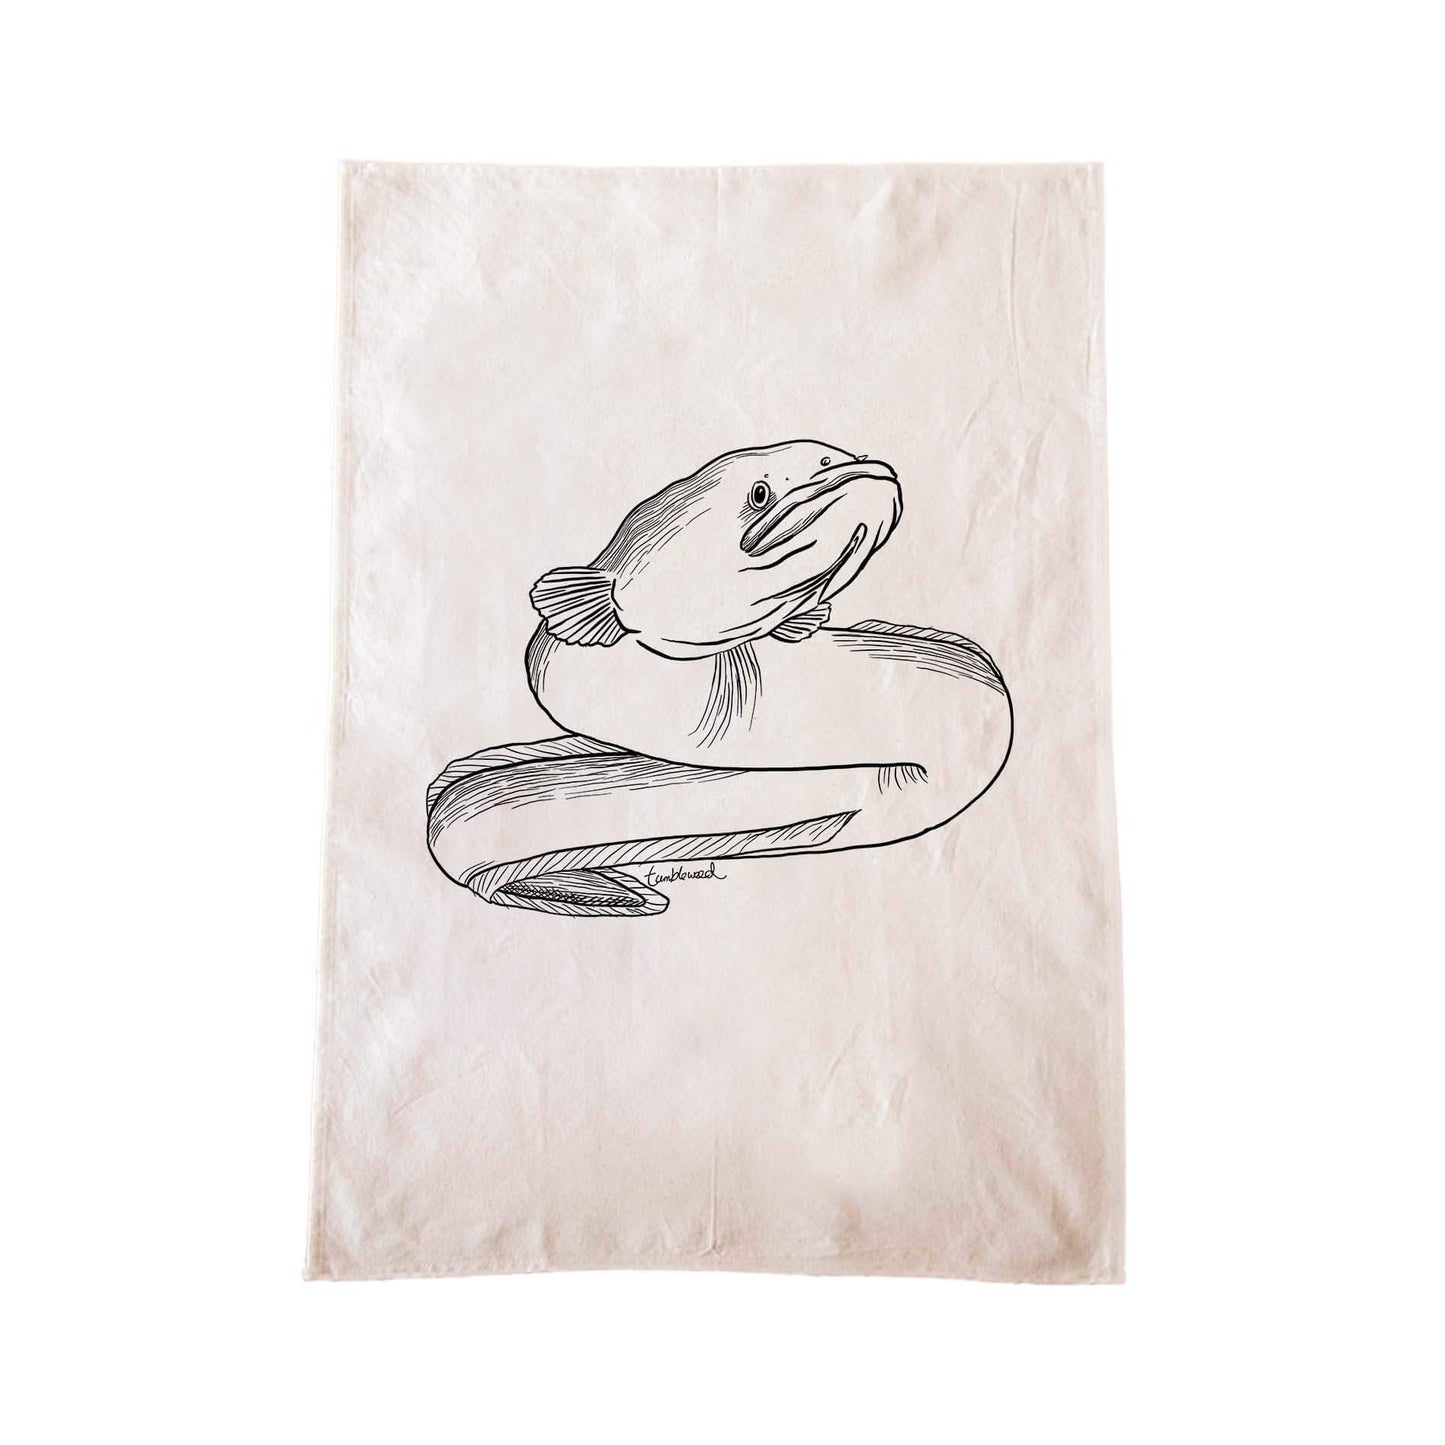 Off-white cotton tea towel with a screen printed Longfin Eel/Tuna design.